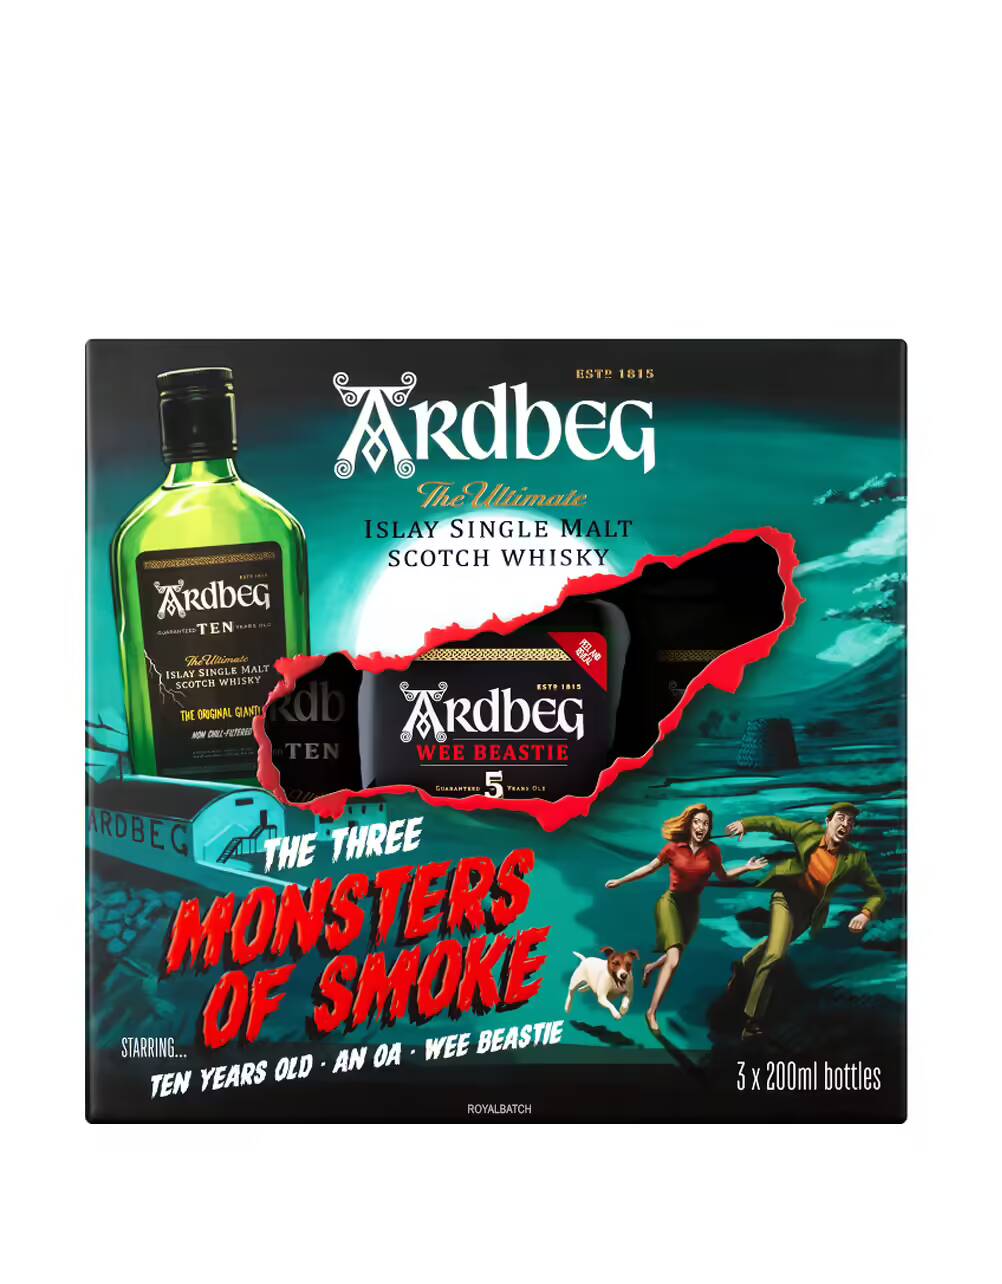 Ardbeg The Three Monsters of Smoke Variety Pack of 3 Single Malt Scotch Whisky